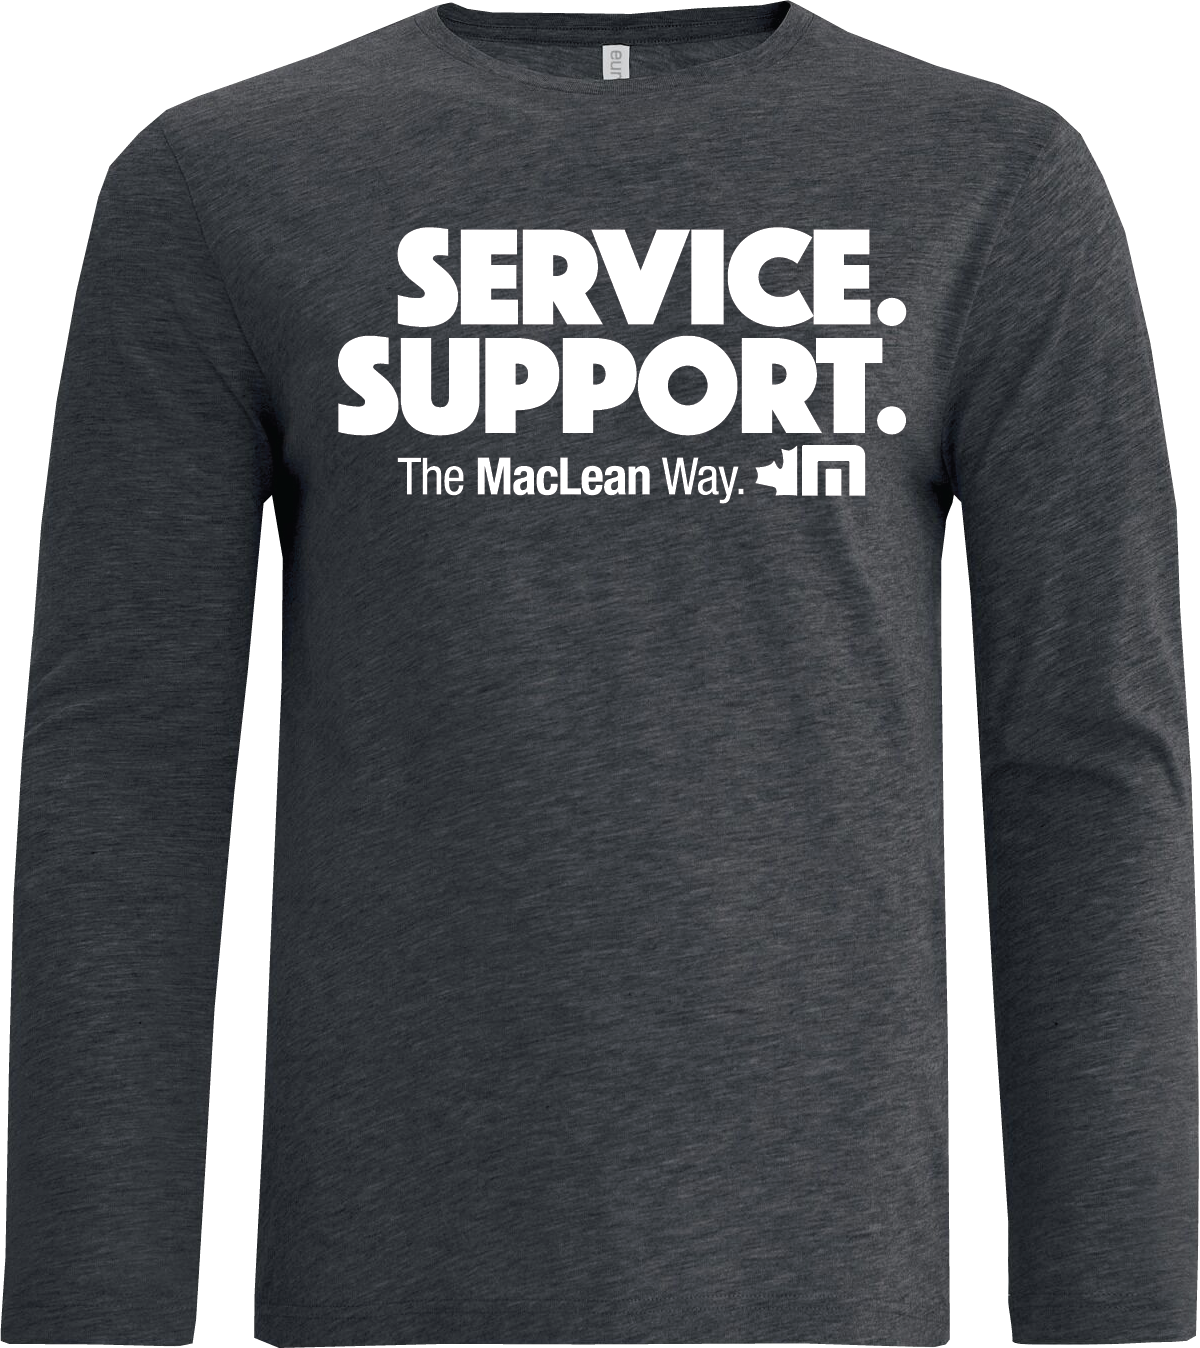 The MacLean Way- Longsleeve Shirt- Women's